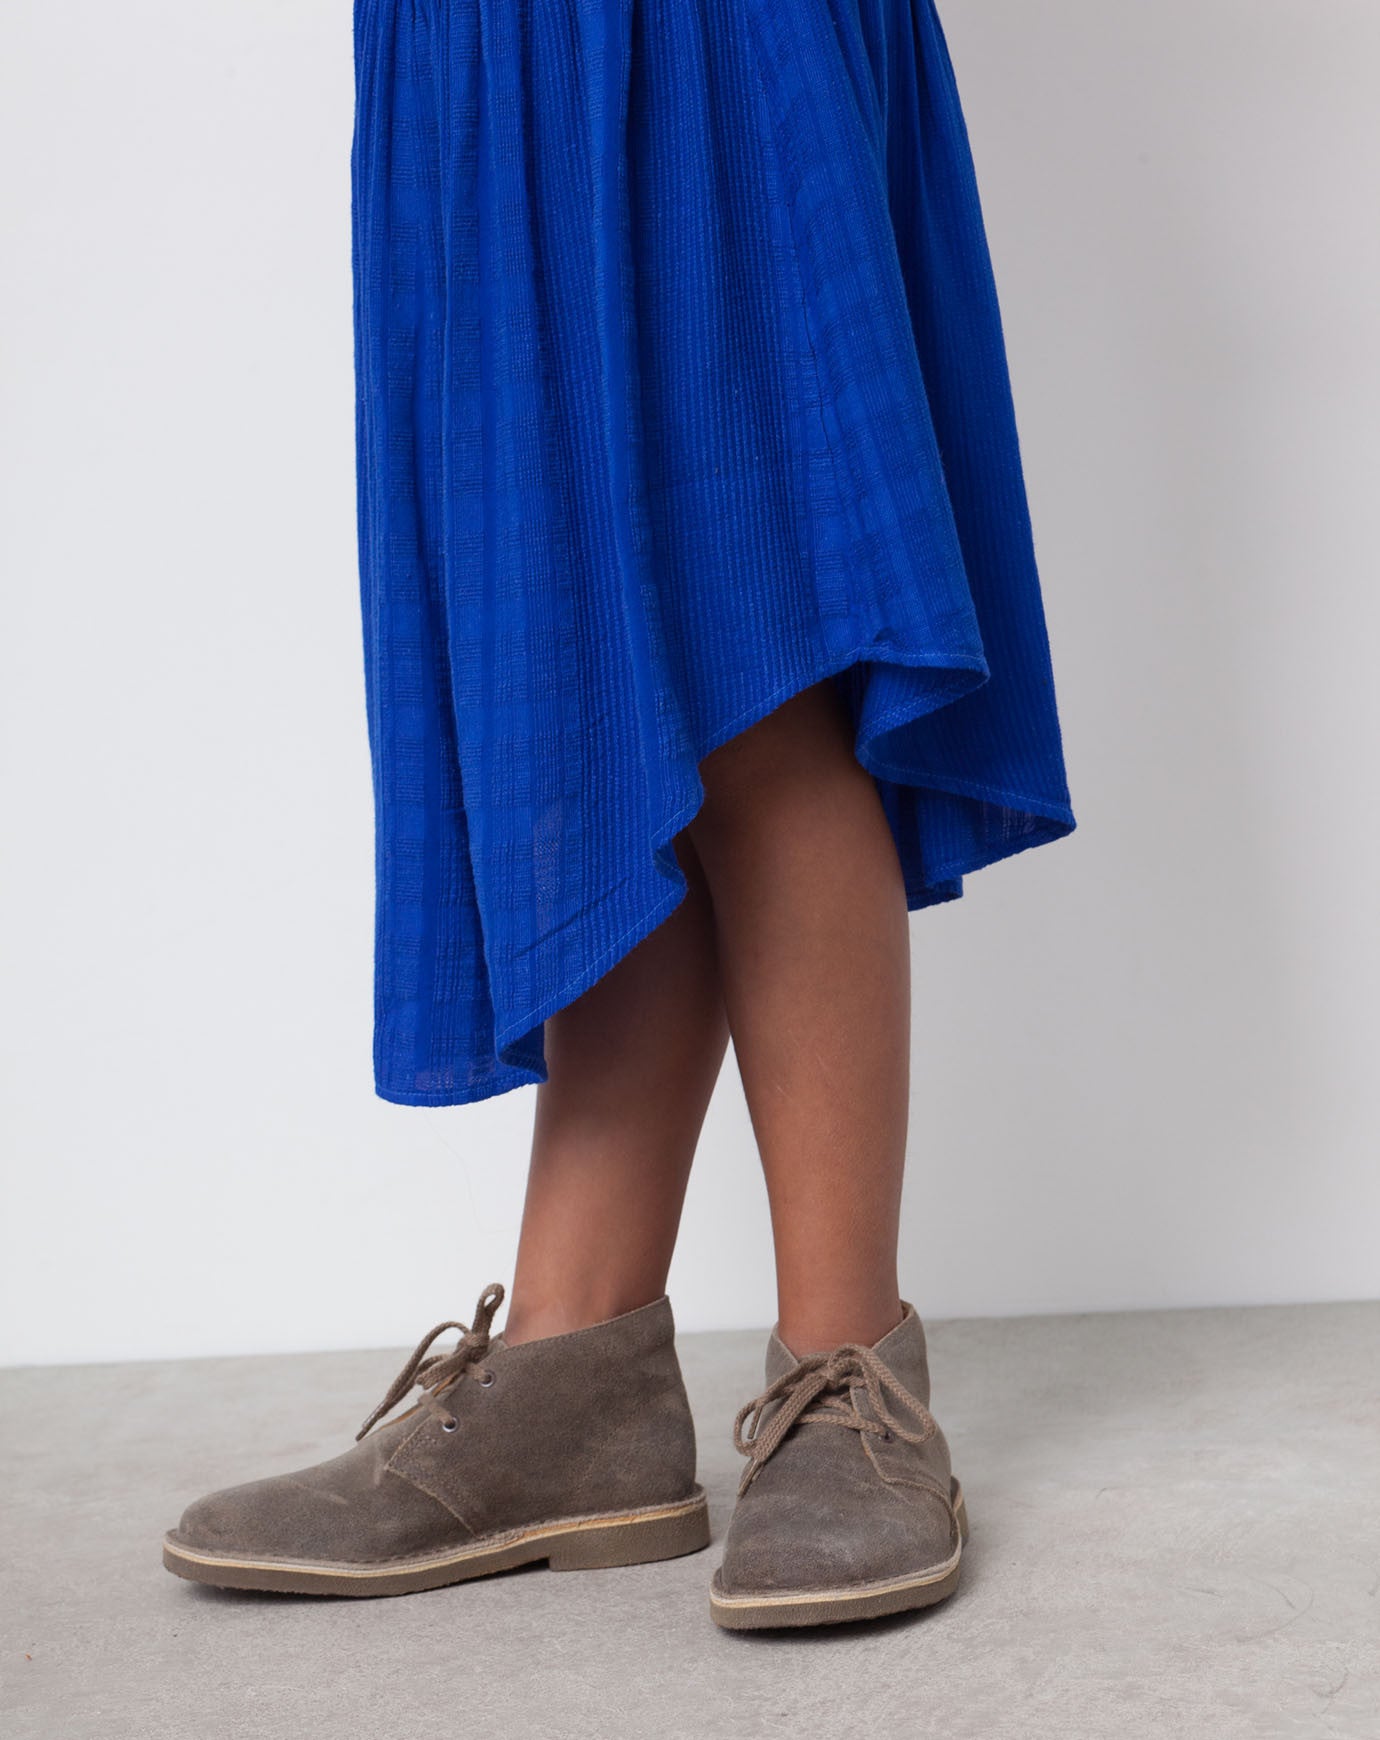 Nico Nico Joplin Textured Skirt in Blueberry